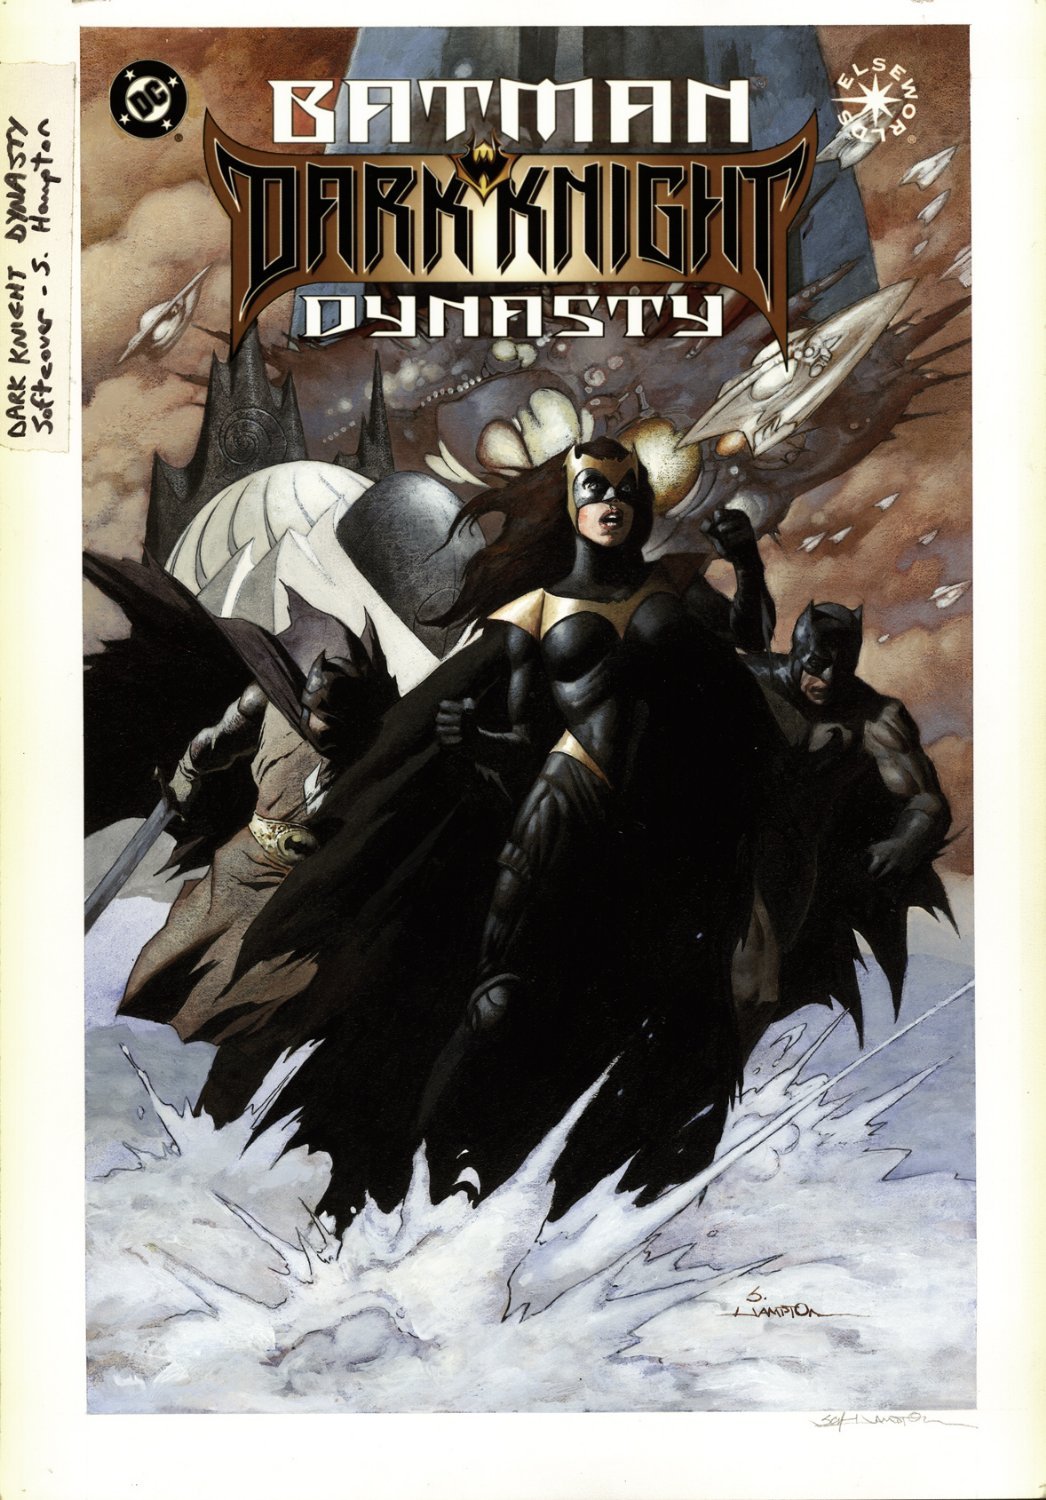 HAMTON, SCOTT - Batman: Dark Knight Dynasty graphic novel cover painting.  Past, present and future versions of Batman. Logo on overlay, in Stephen  Donnelly's HAMPTON, SCOTT - Marvel, DC, etc. Comic Art